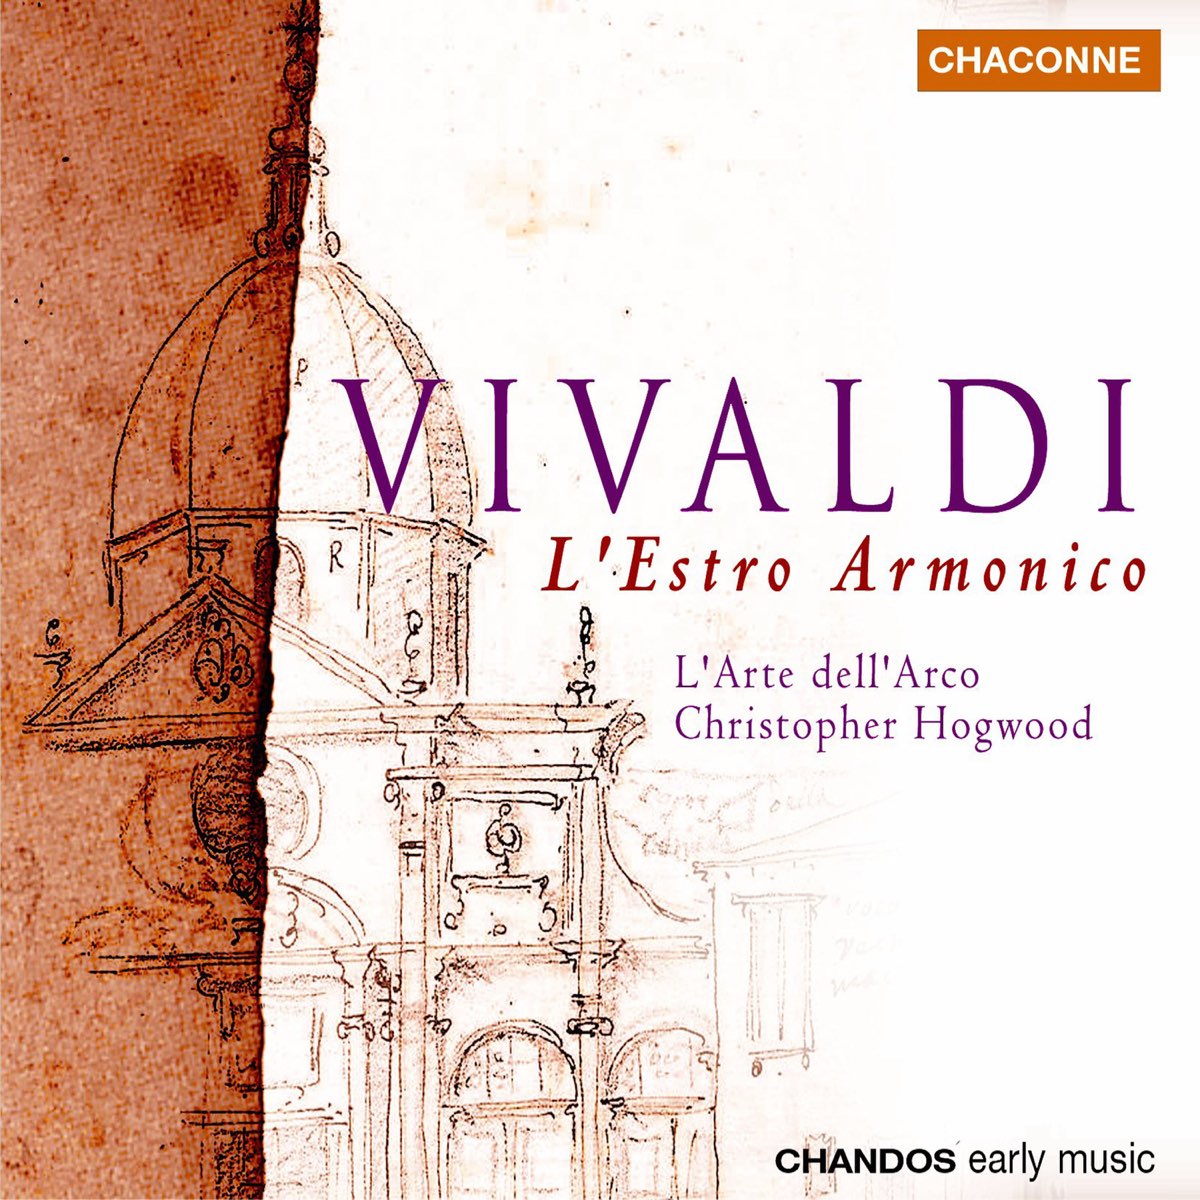 Вивальди л. Concerto in g Minor RV 578 L Estro Armonico II Larghetto.